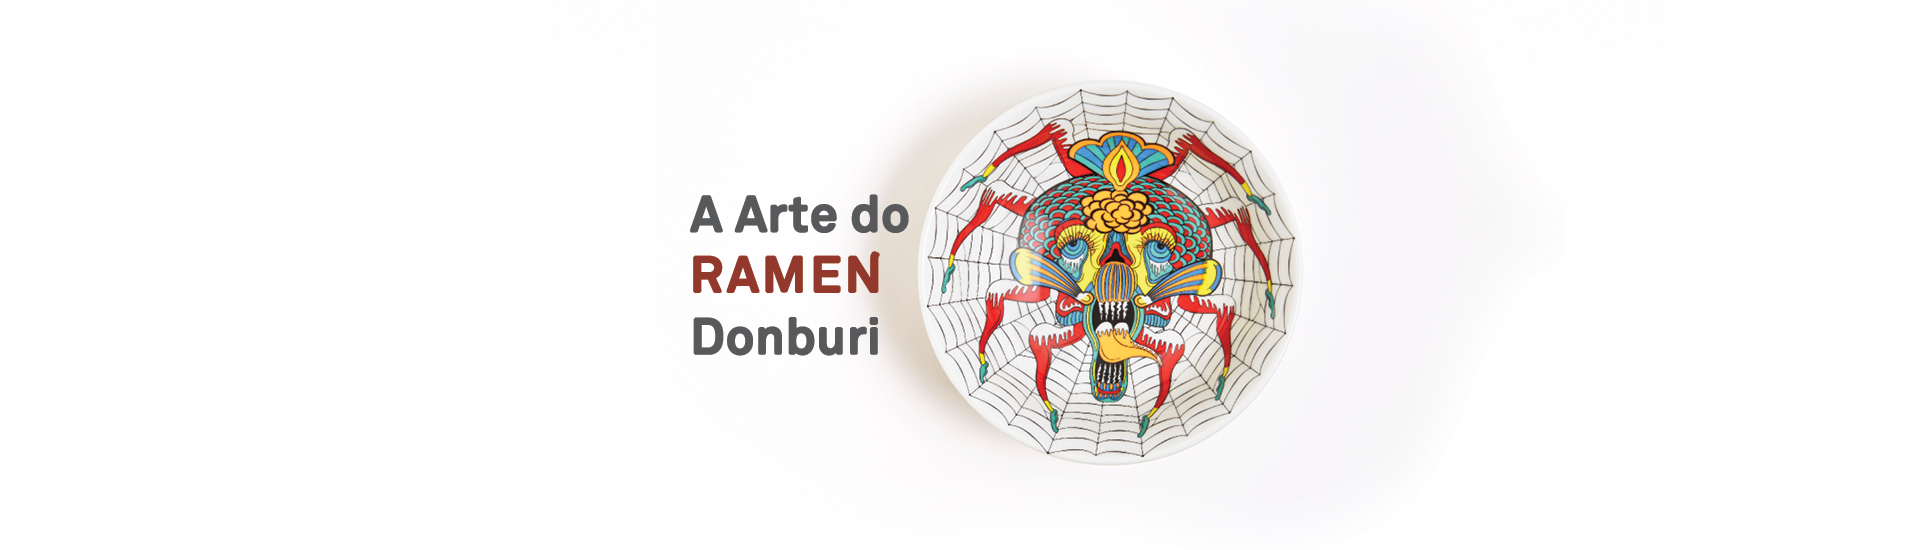 A arte do RAMEN donburi